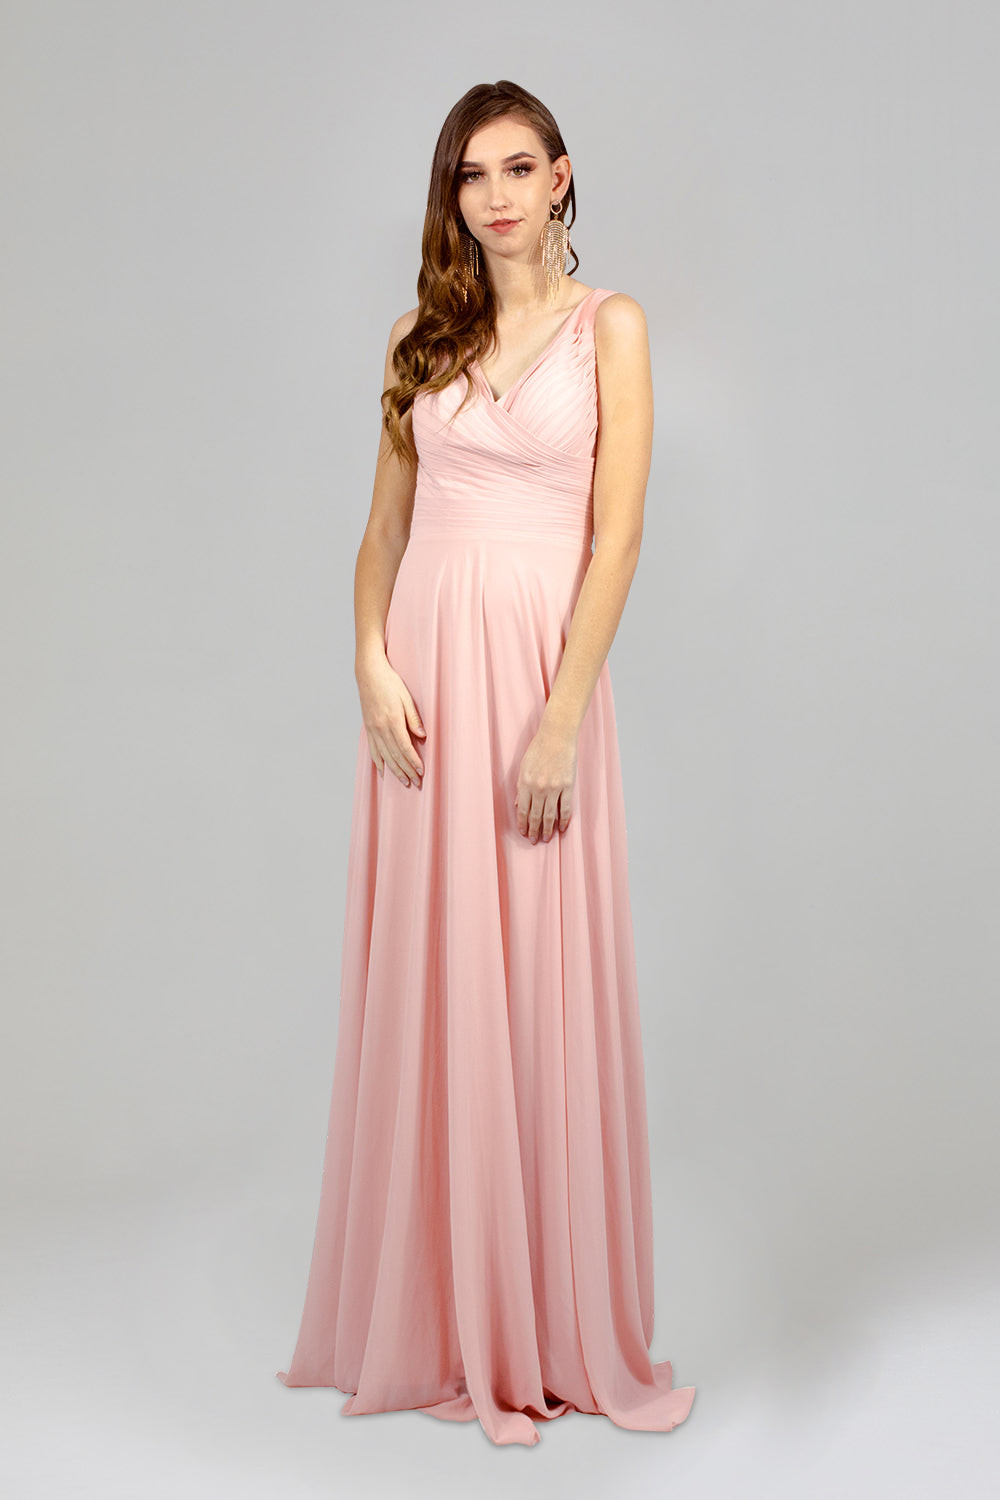 pink bridesmaid dresses perth australia envious bridal & formal